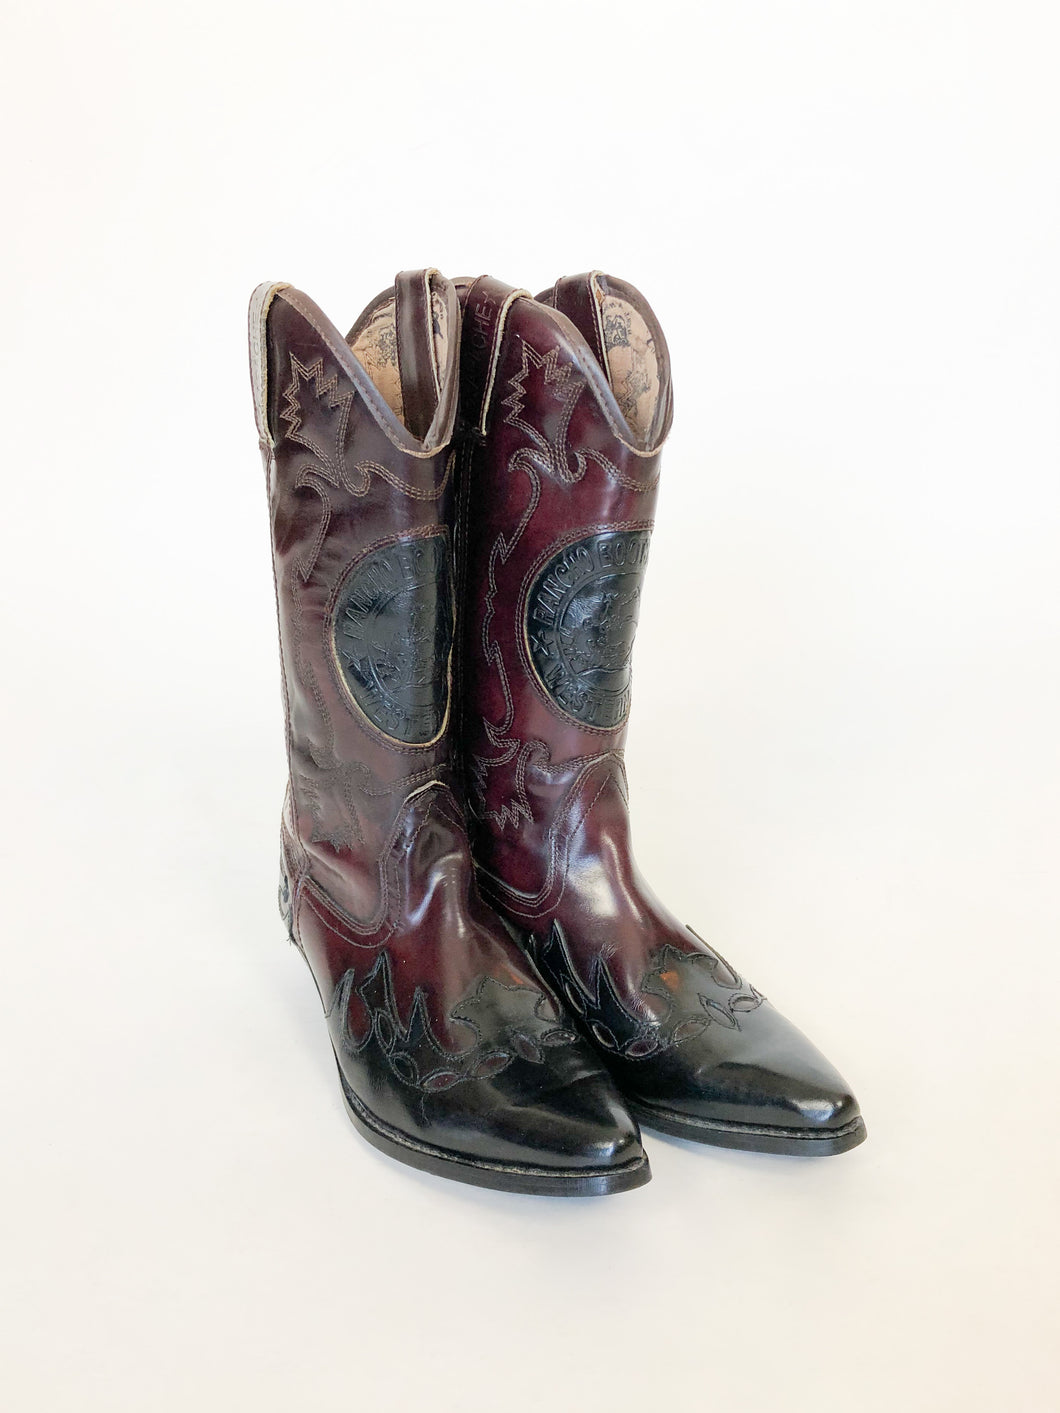 Vintage Two Tone Rancho Boots Makers Cowboy Boots Men’s Size 42